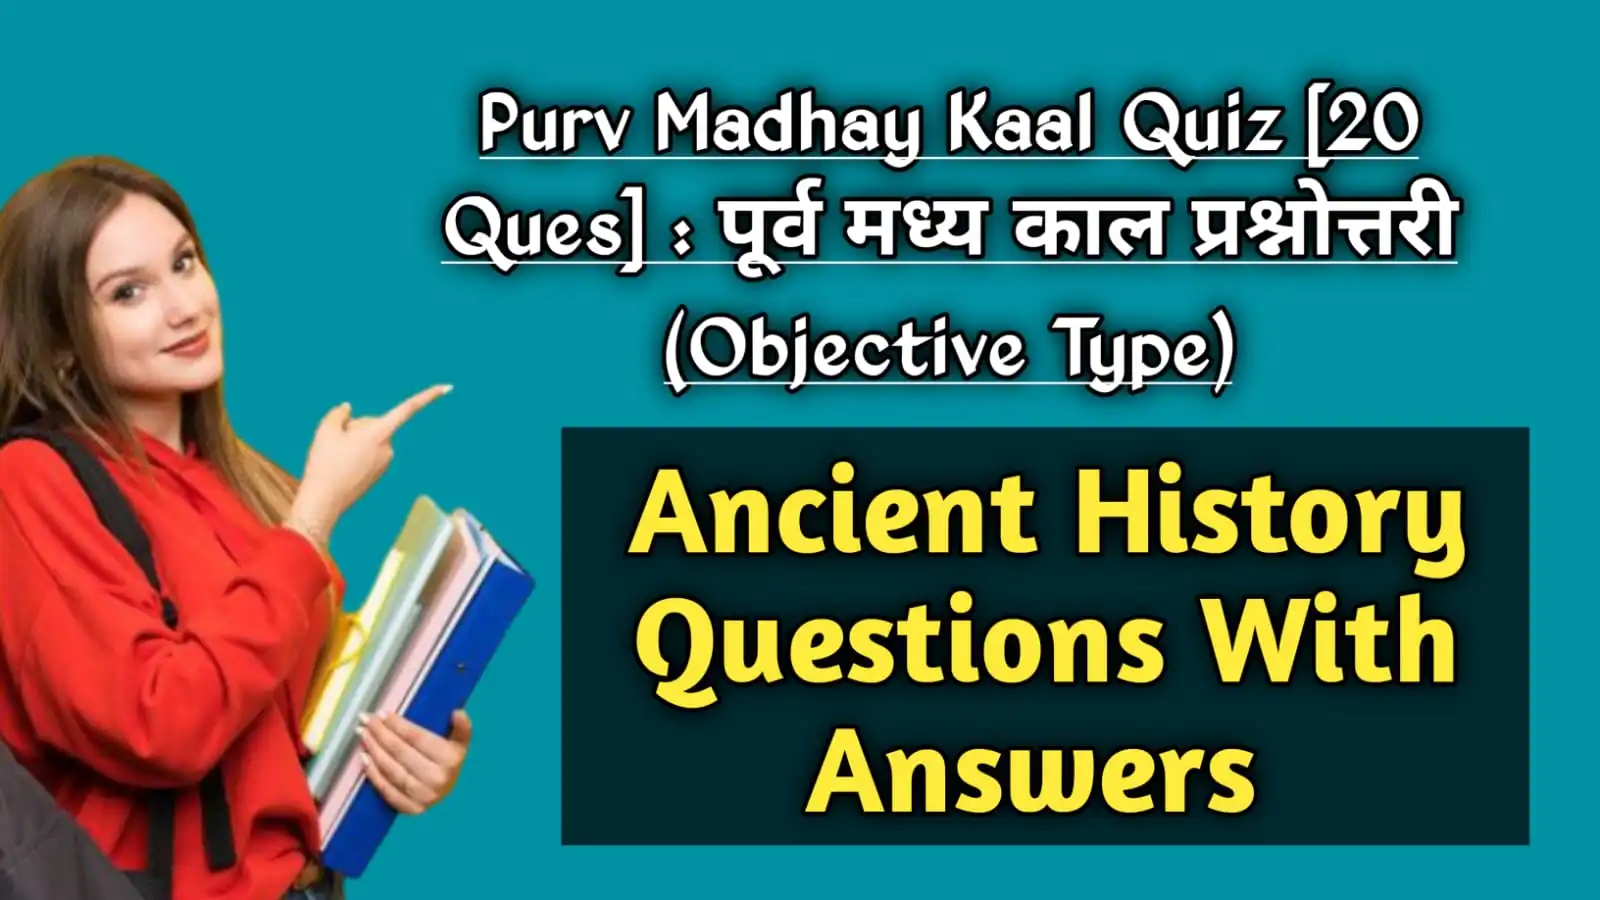 Purv Madhay Kaal Quiz